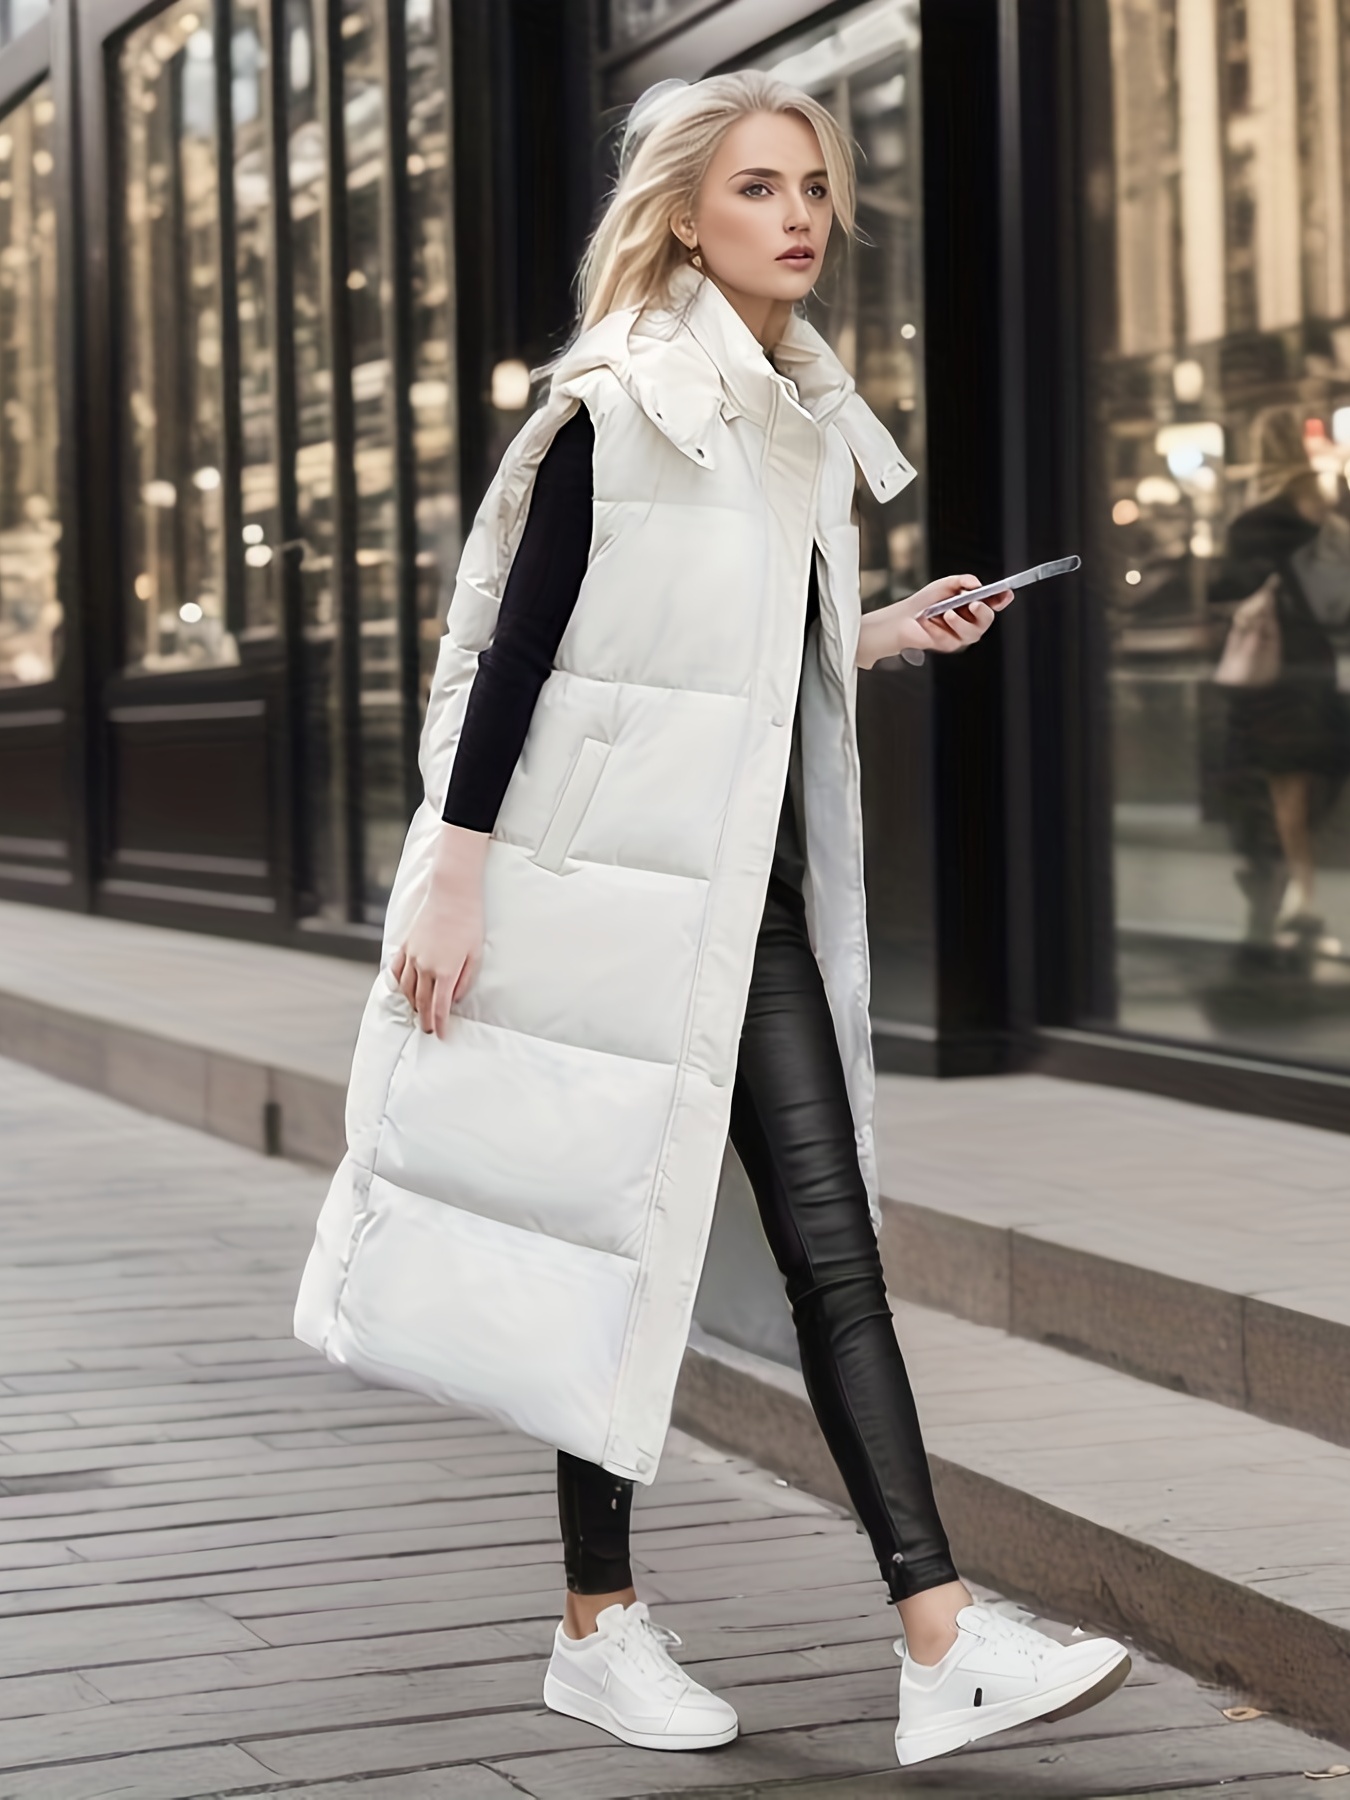 Abrigo largo blanco - Moda de invierno a medida para hombres